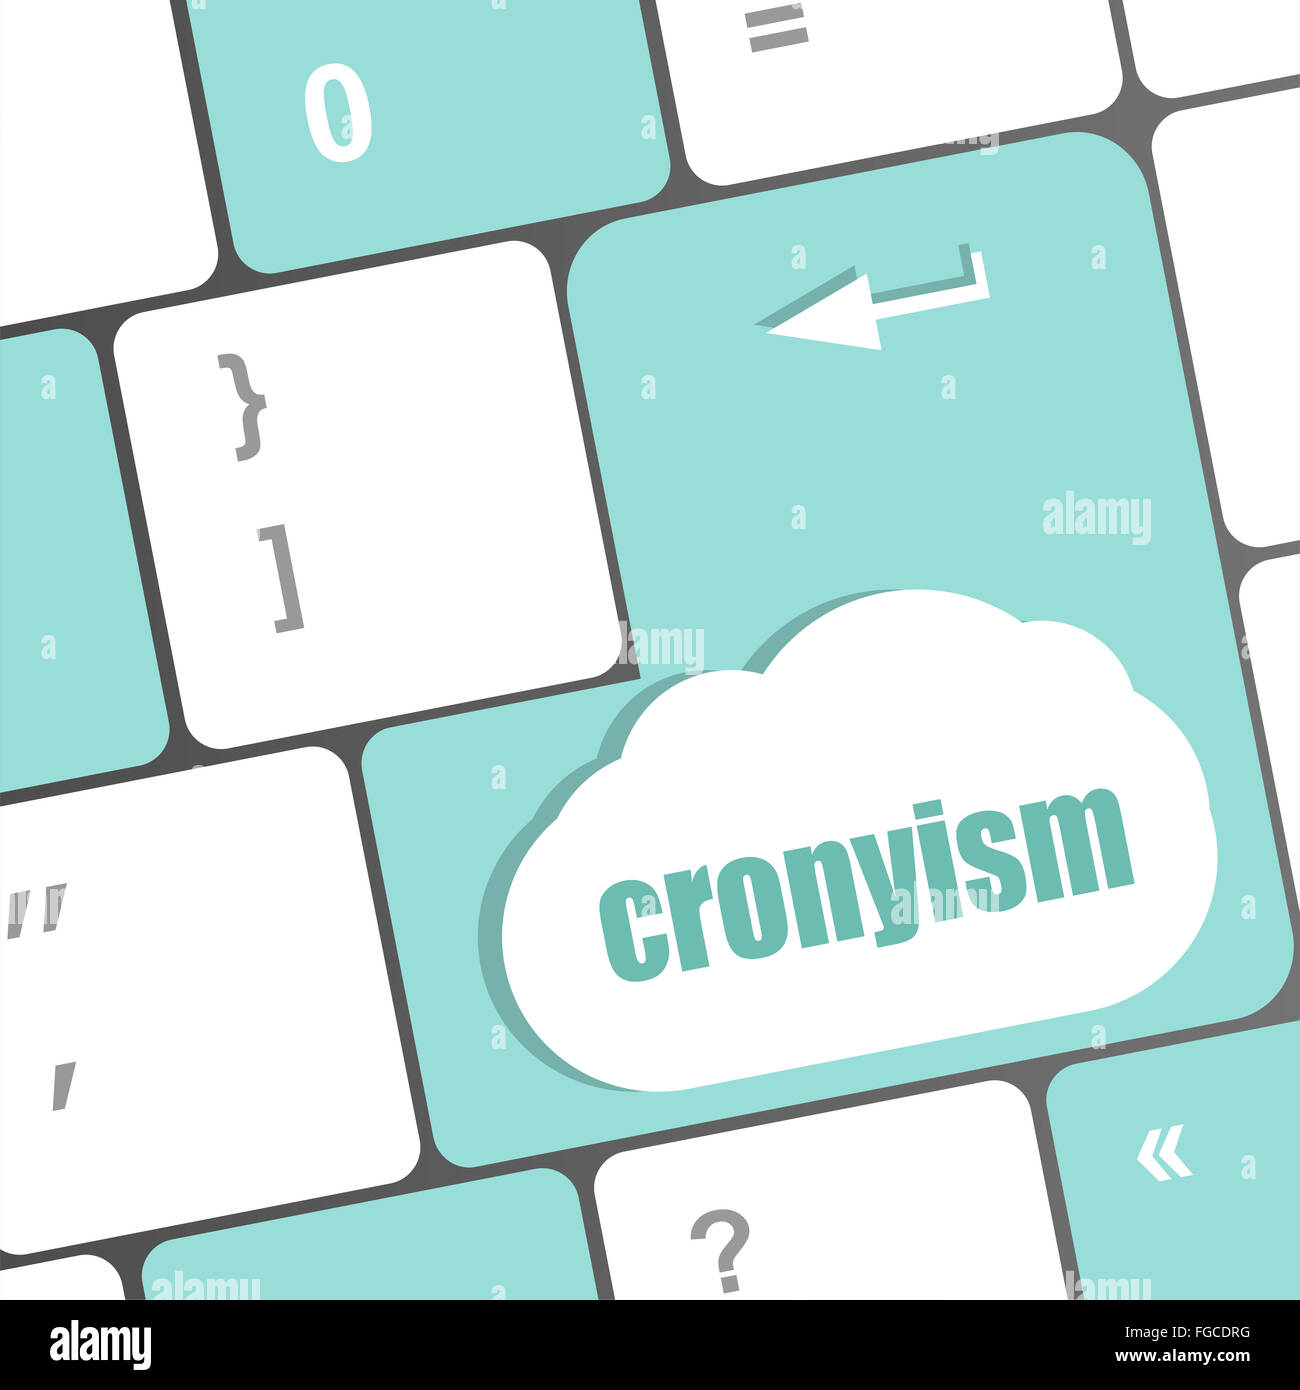 cronyism on laptop keyboard key button Stock Photo